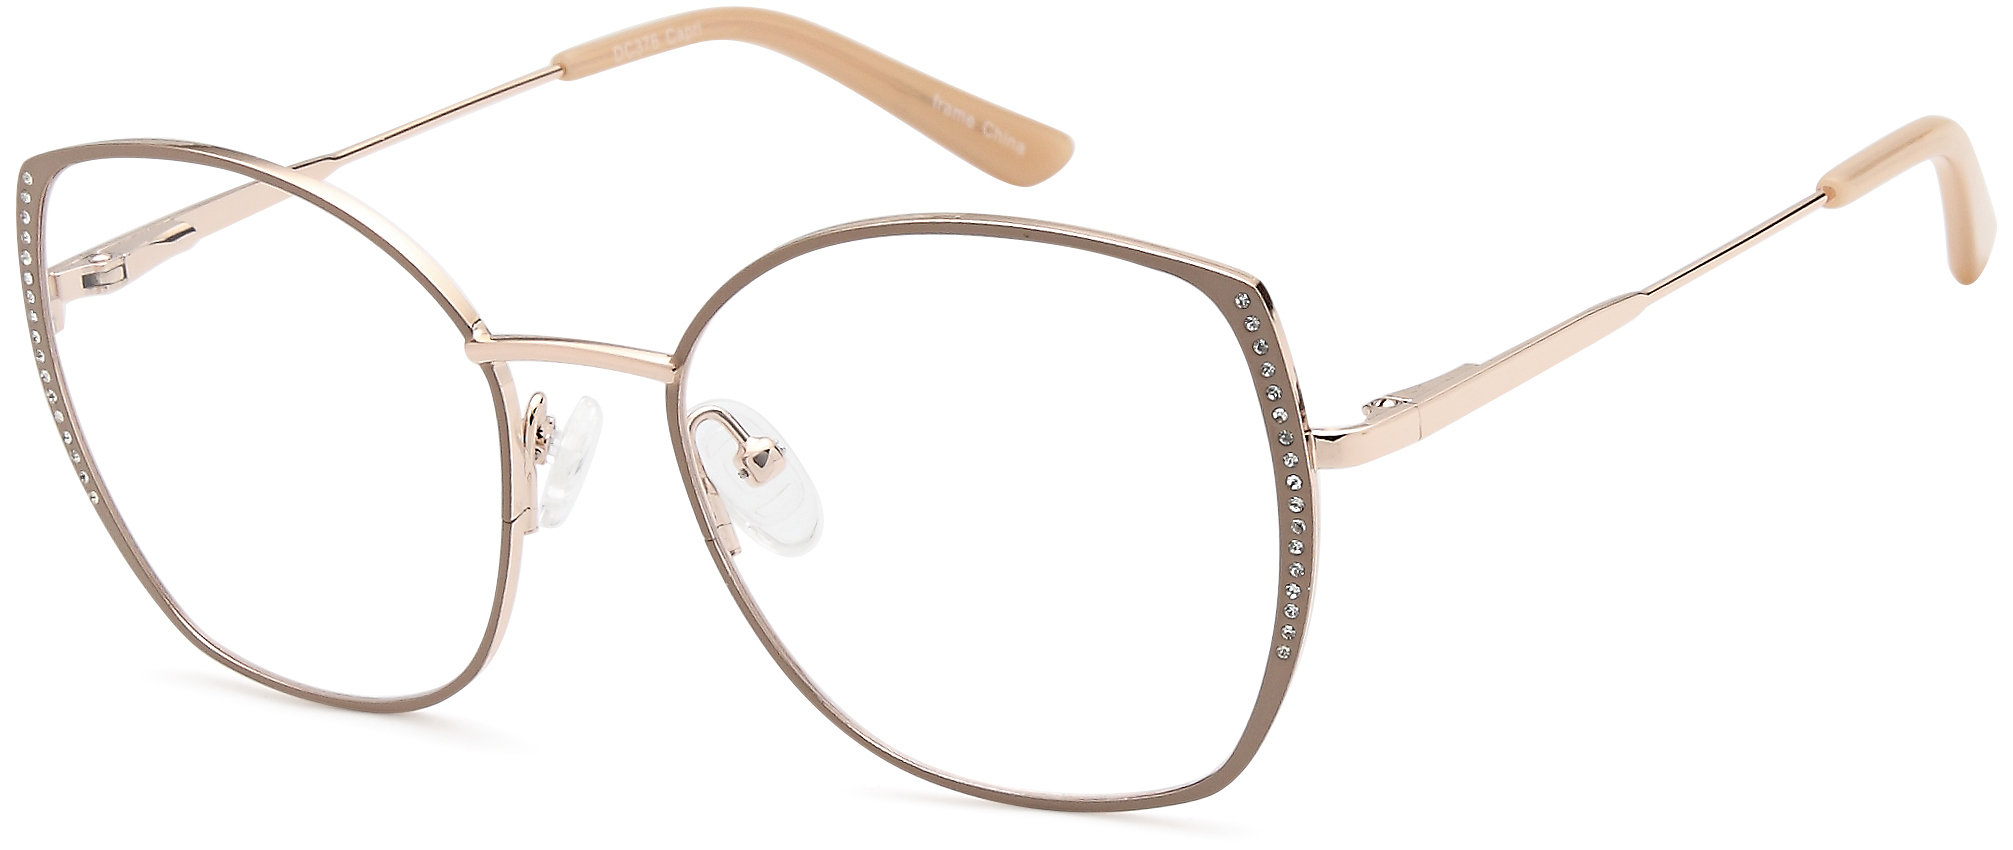 Picture of Di Caprio Eyeglasses DC376